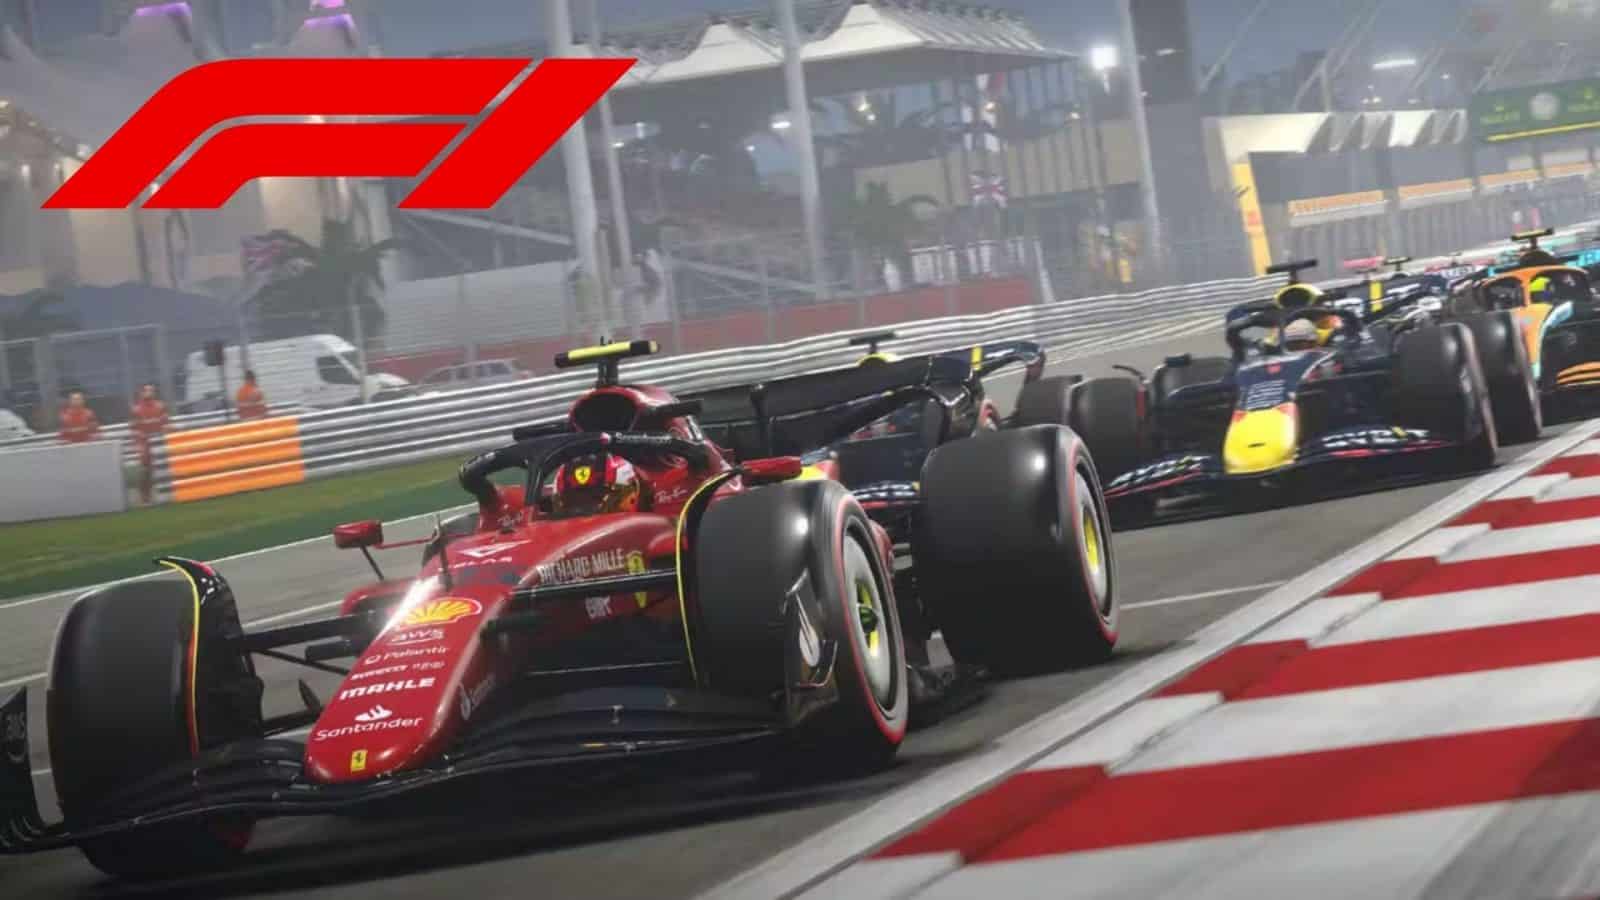 Two F1 Teams Leaked F1 22 Gameplay Footage